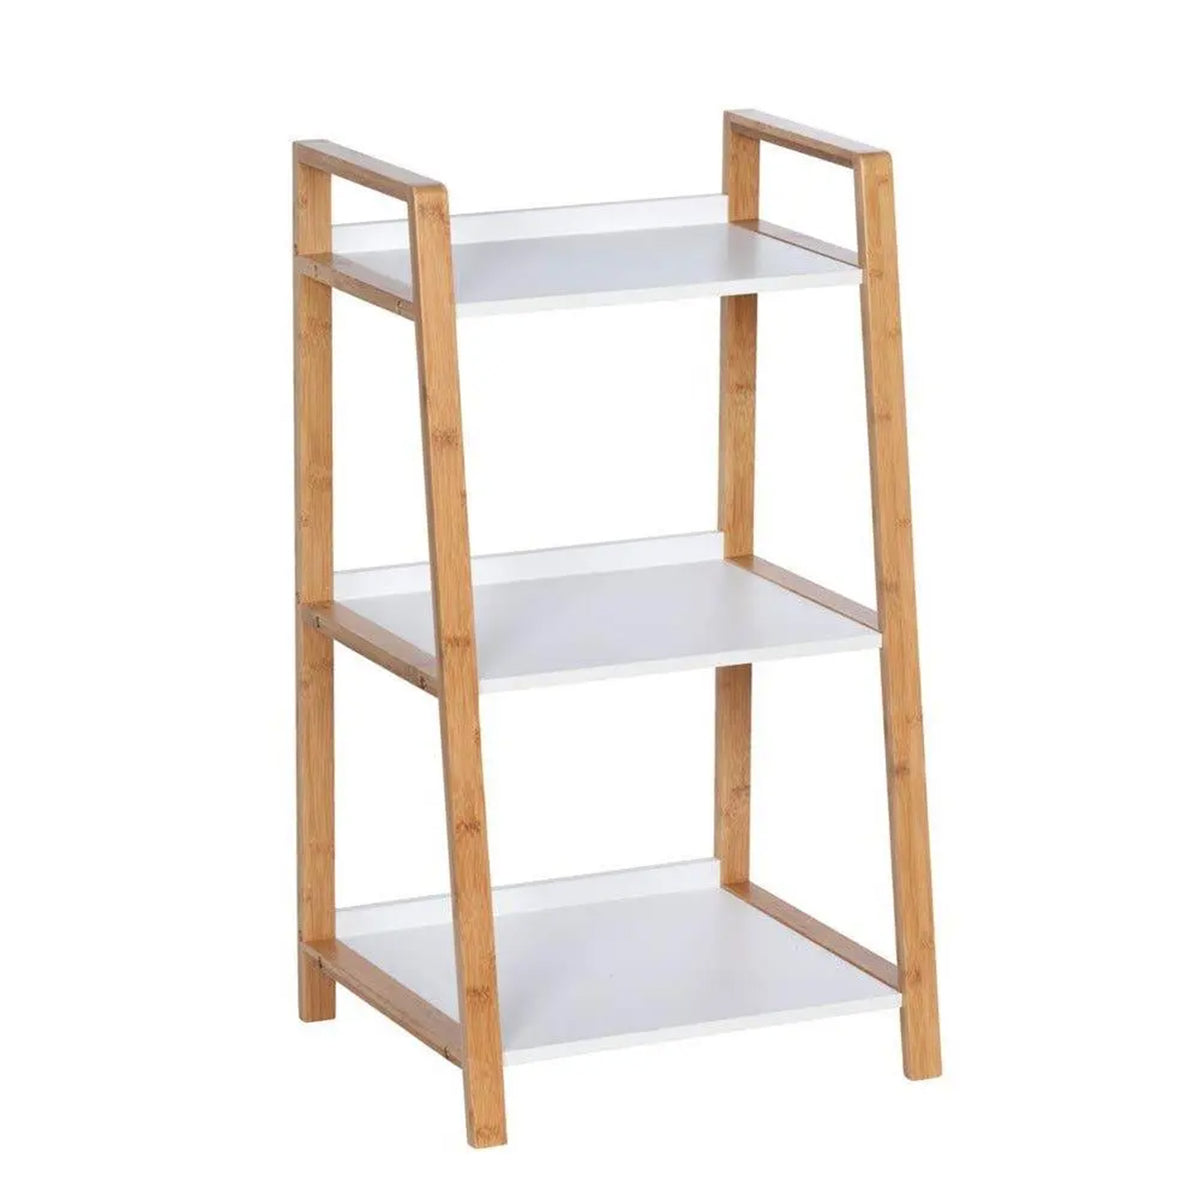 3 Tier Ladder Shelf for Bathroom